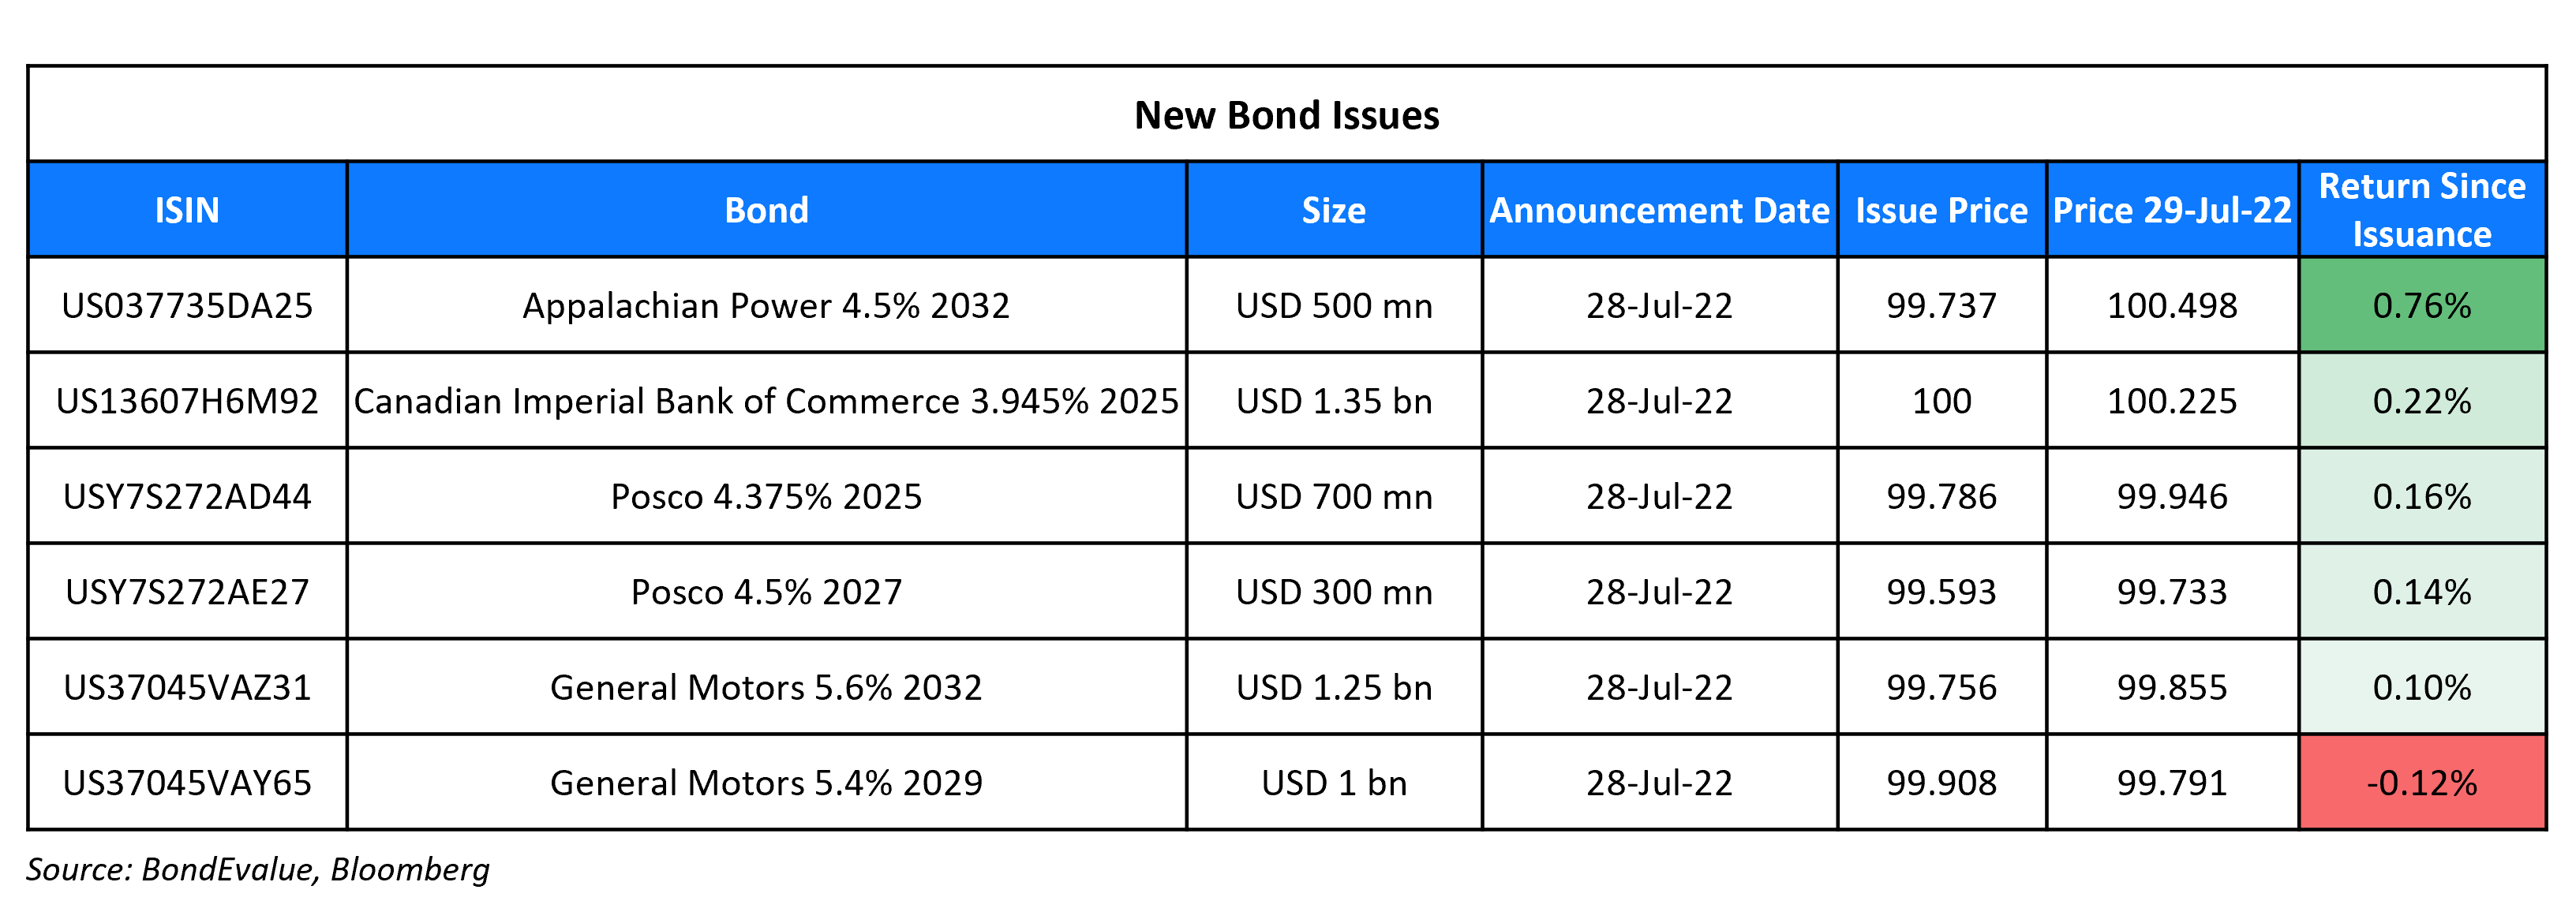 New Bond Issues 29 Jul 22